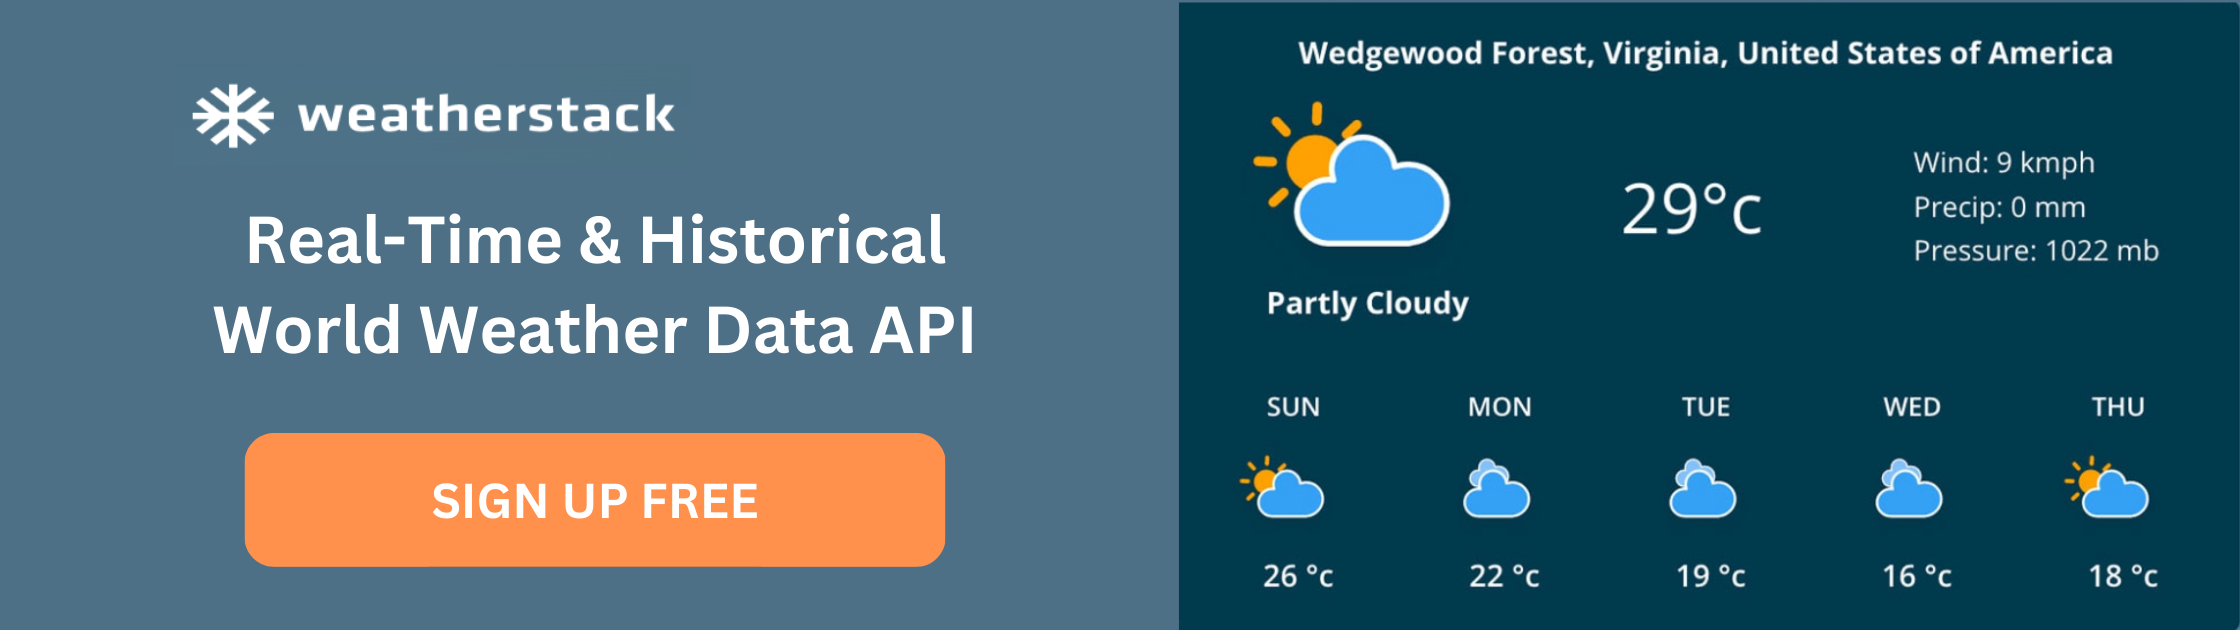 CTA - Weatherstack Weather Forecast Data and Historical Weather Data API - Sign Up Free